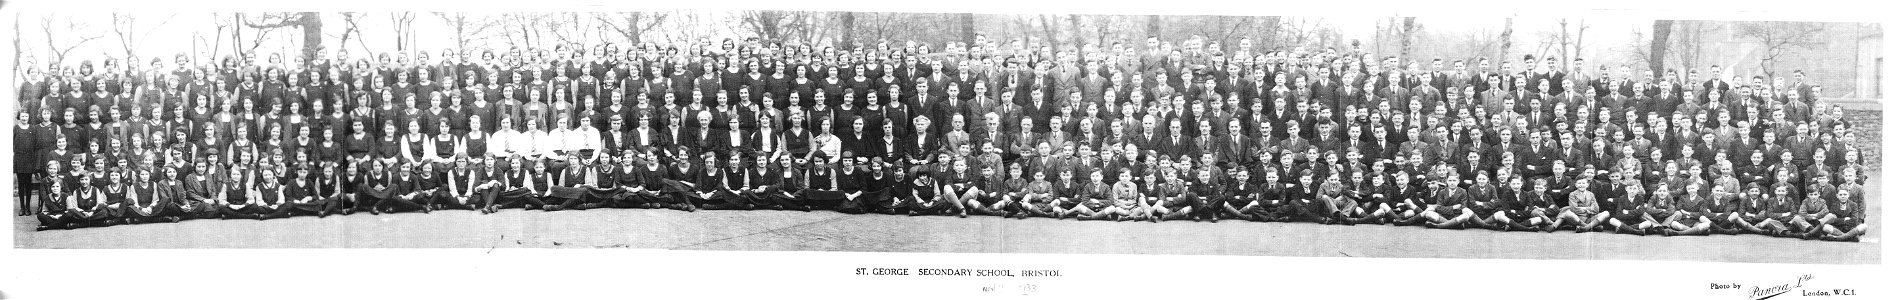 St George Secondary School, Bristol 1933 photo